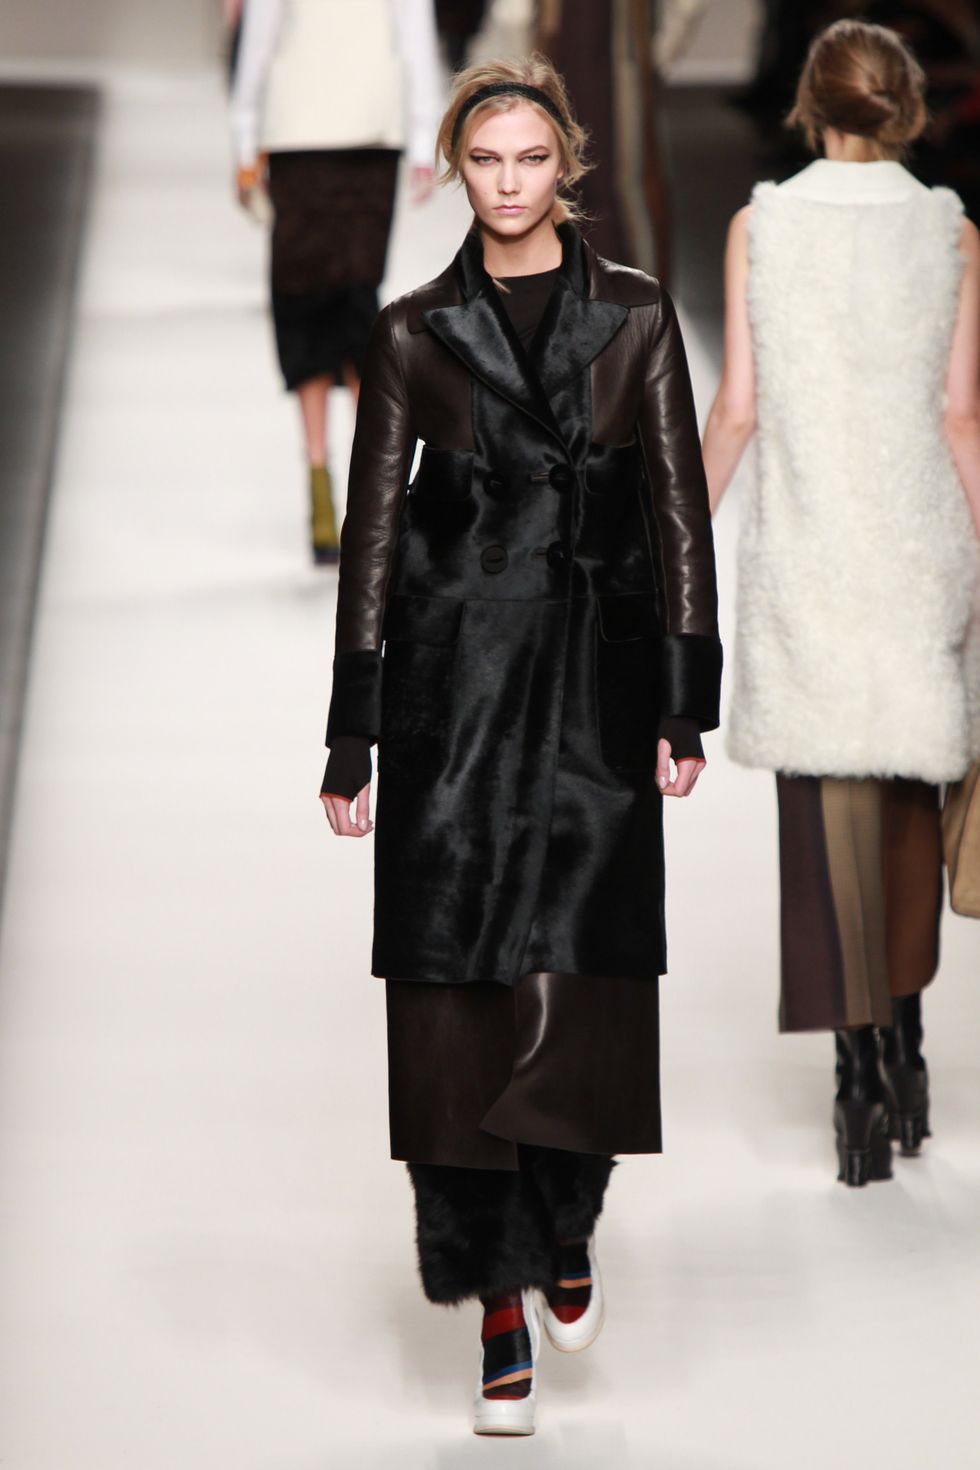 Karlie Kloss takes to the catwalk for Fendi at Milan Fashion Week